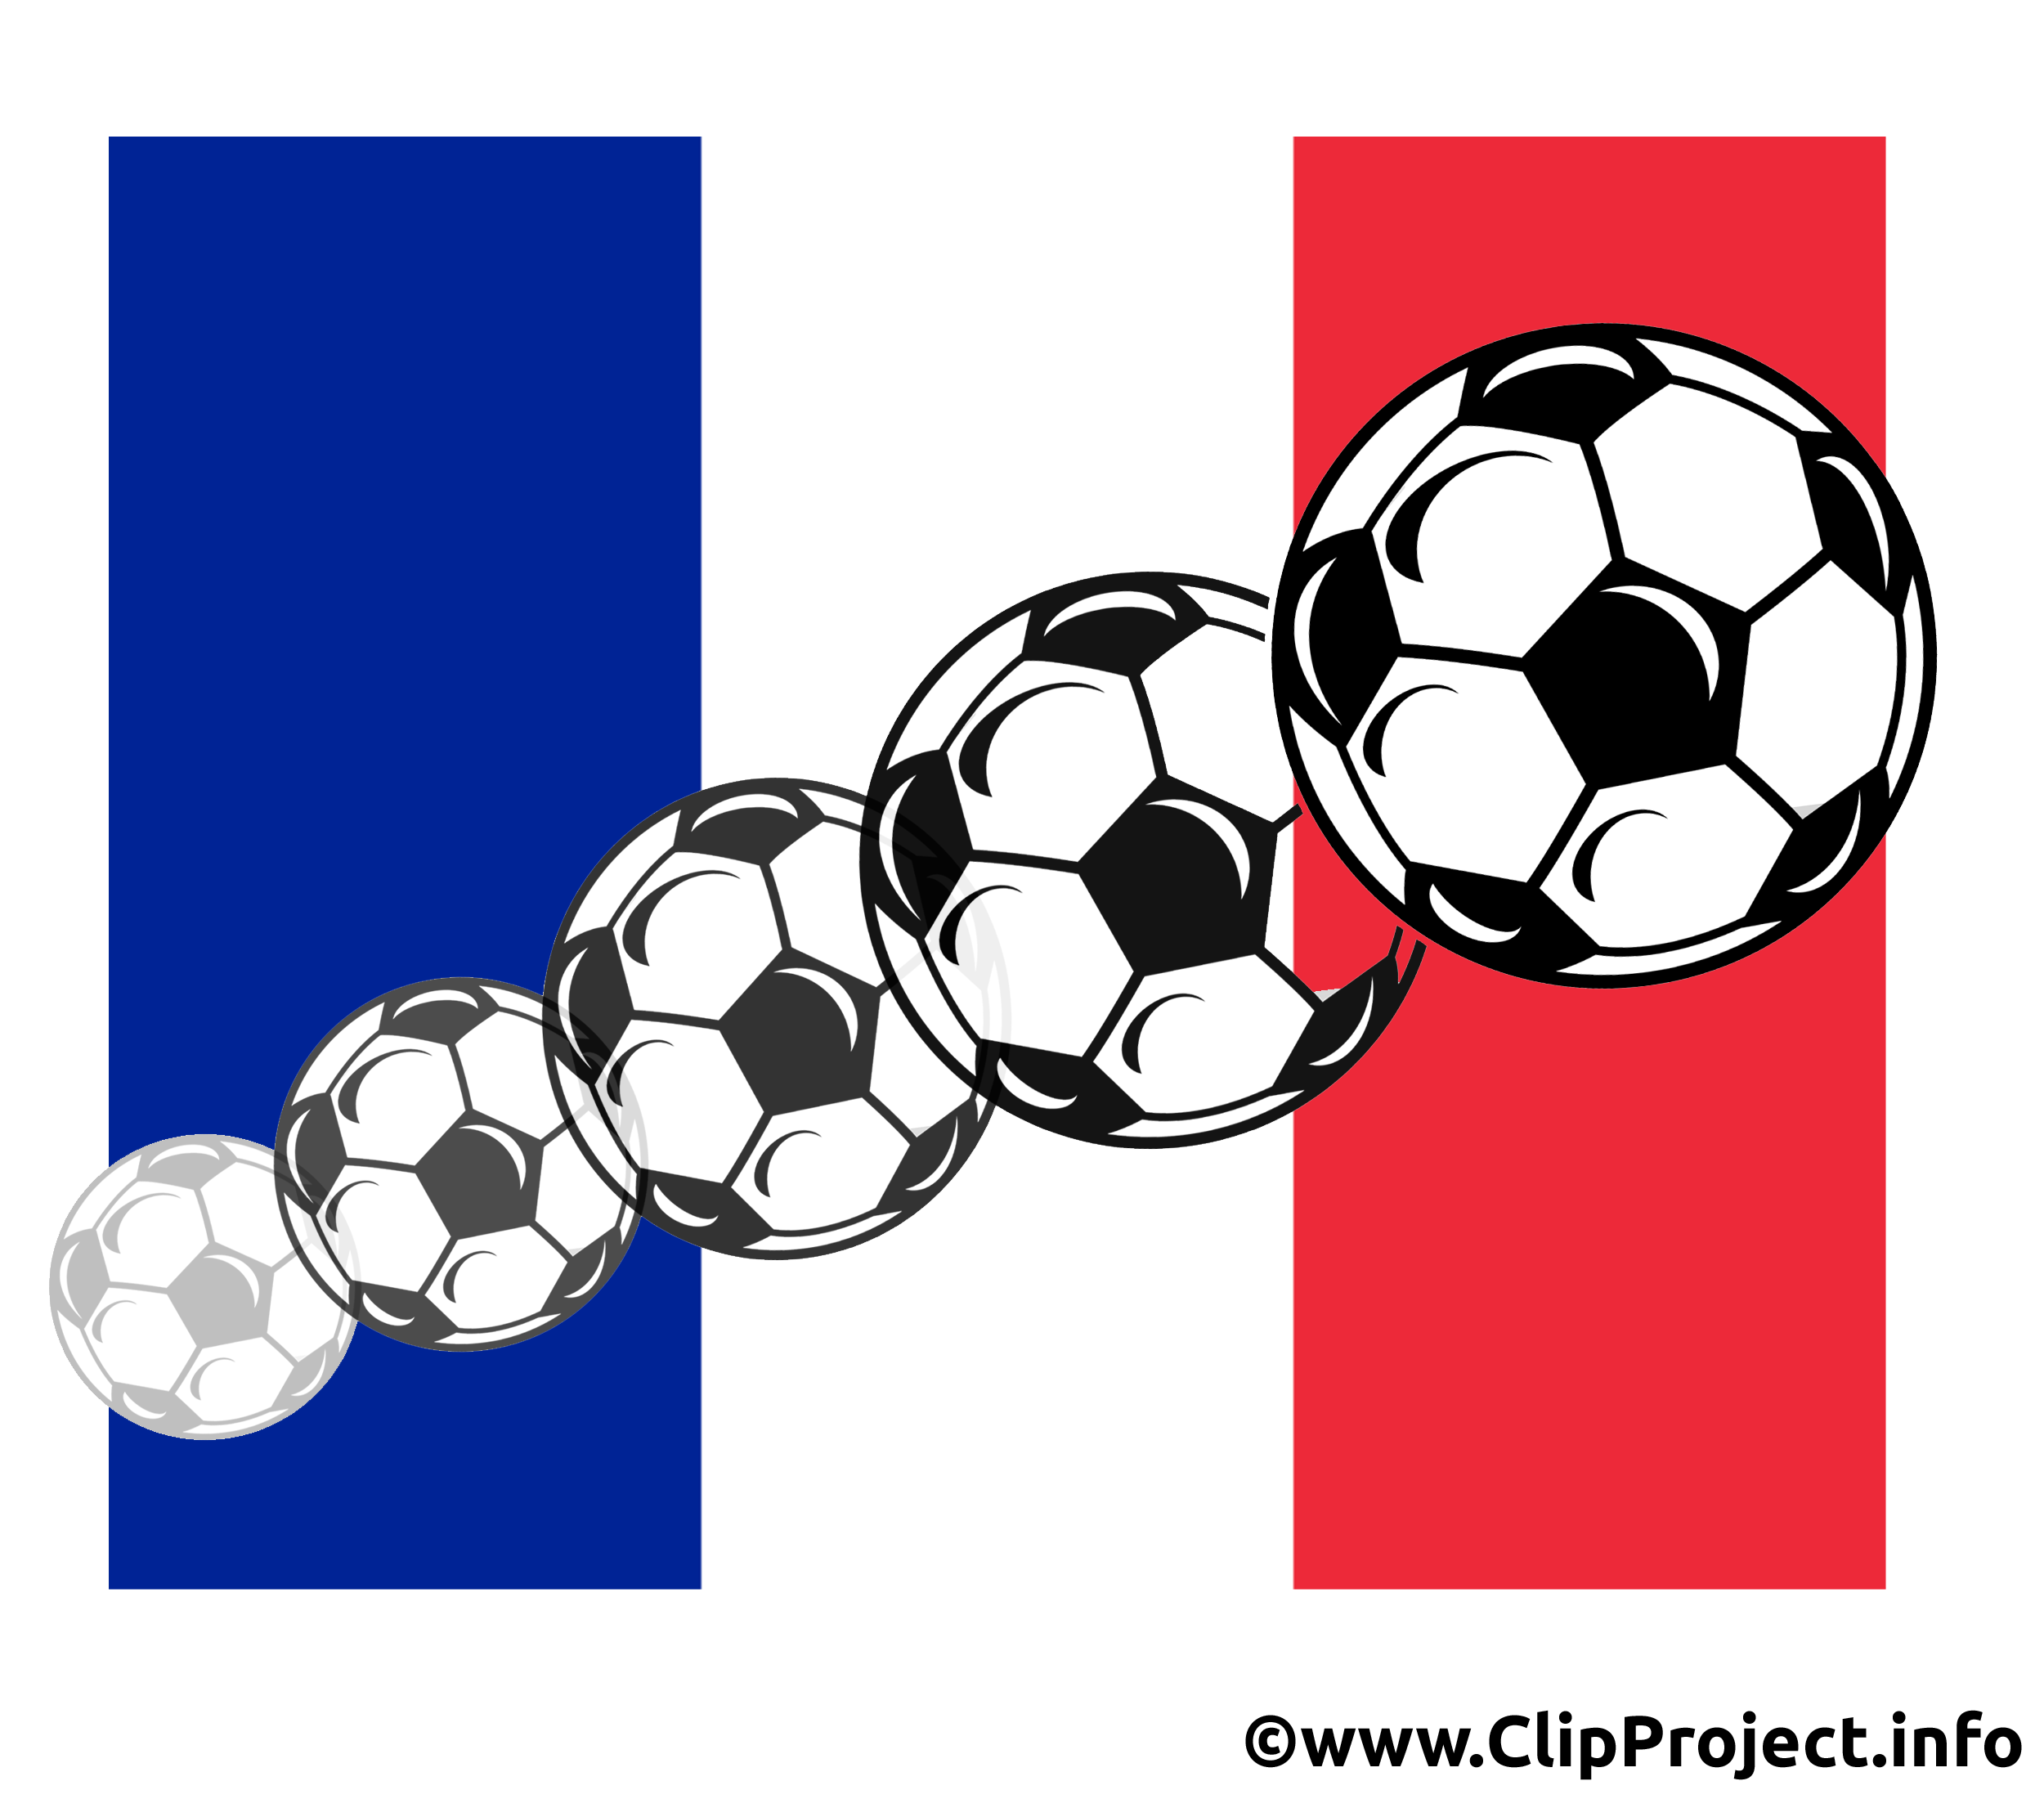 France illustration - Football images